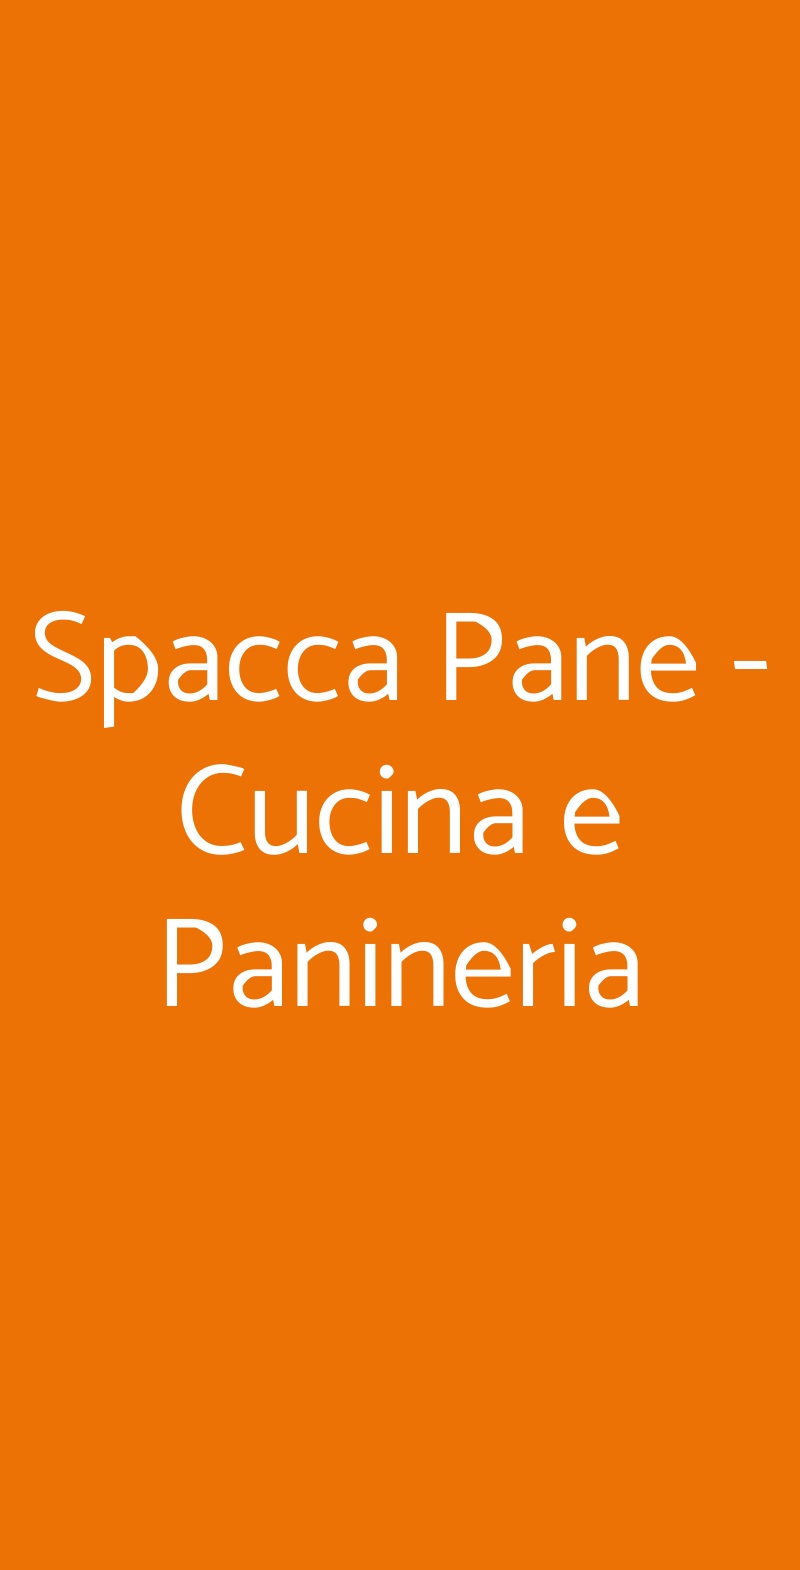 Spacca Pane - Cucina e Panineria Roma menù 1 pagina